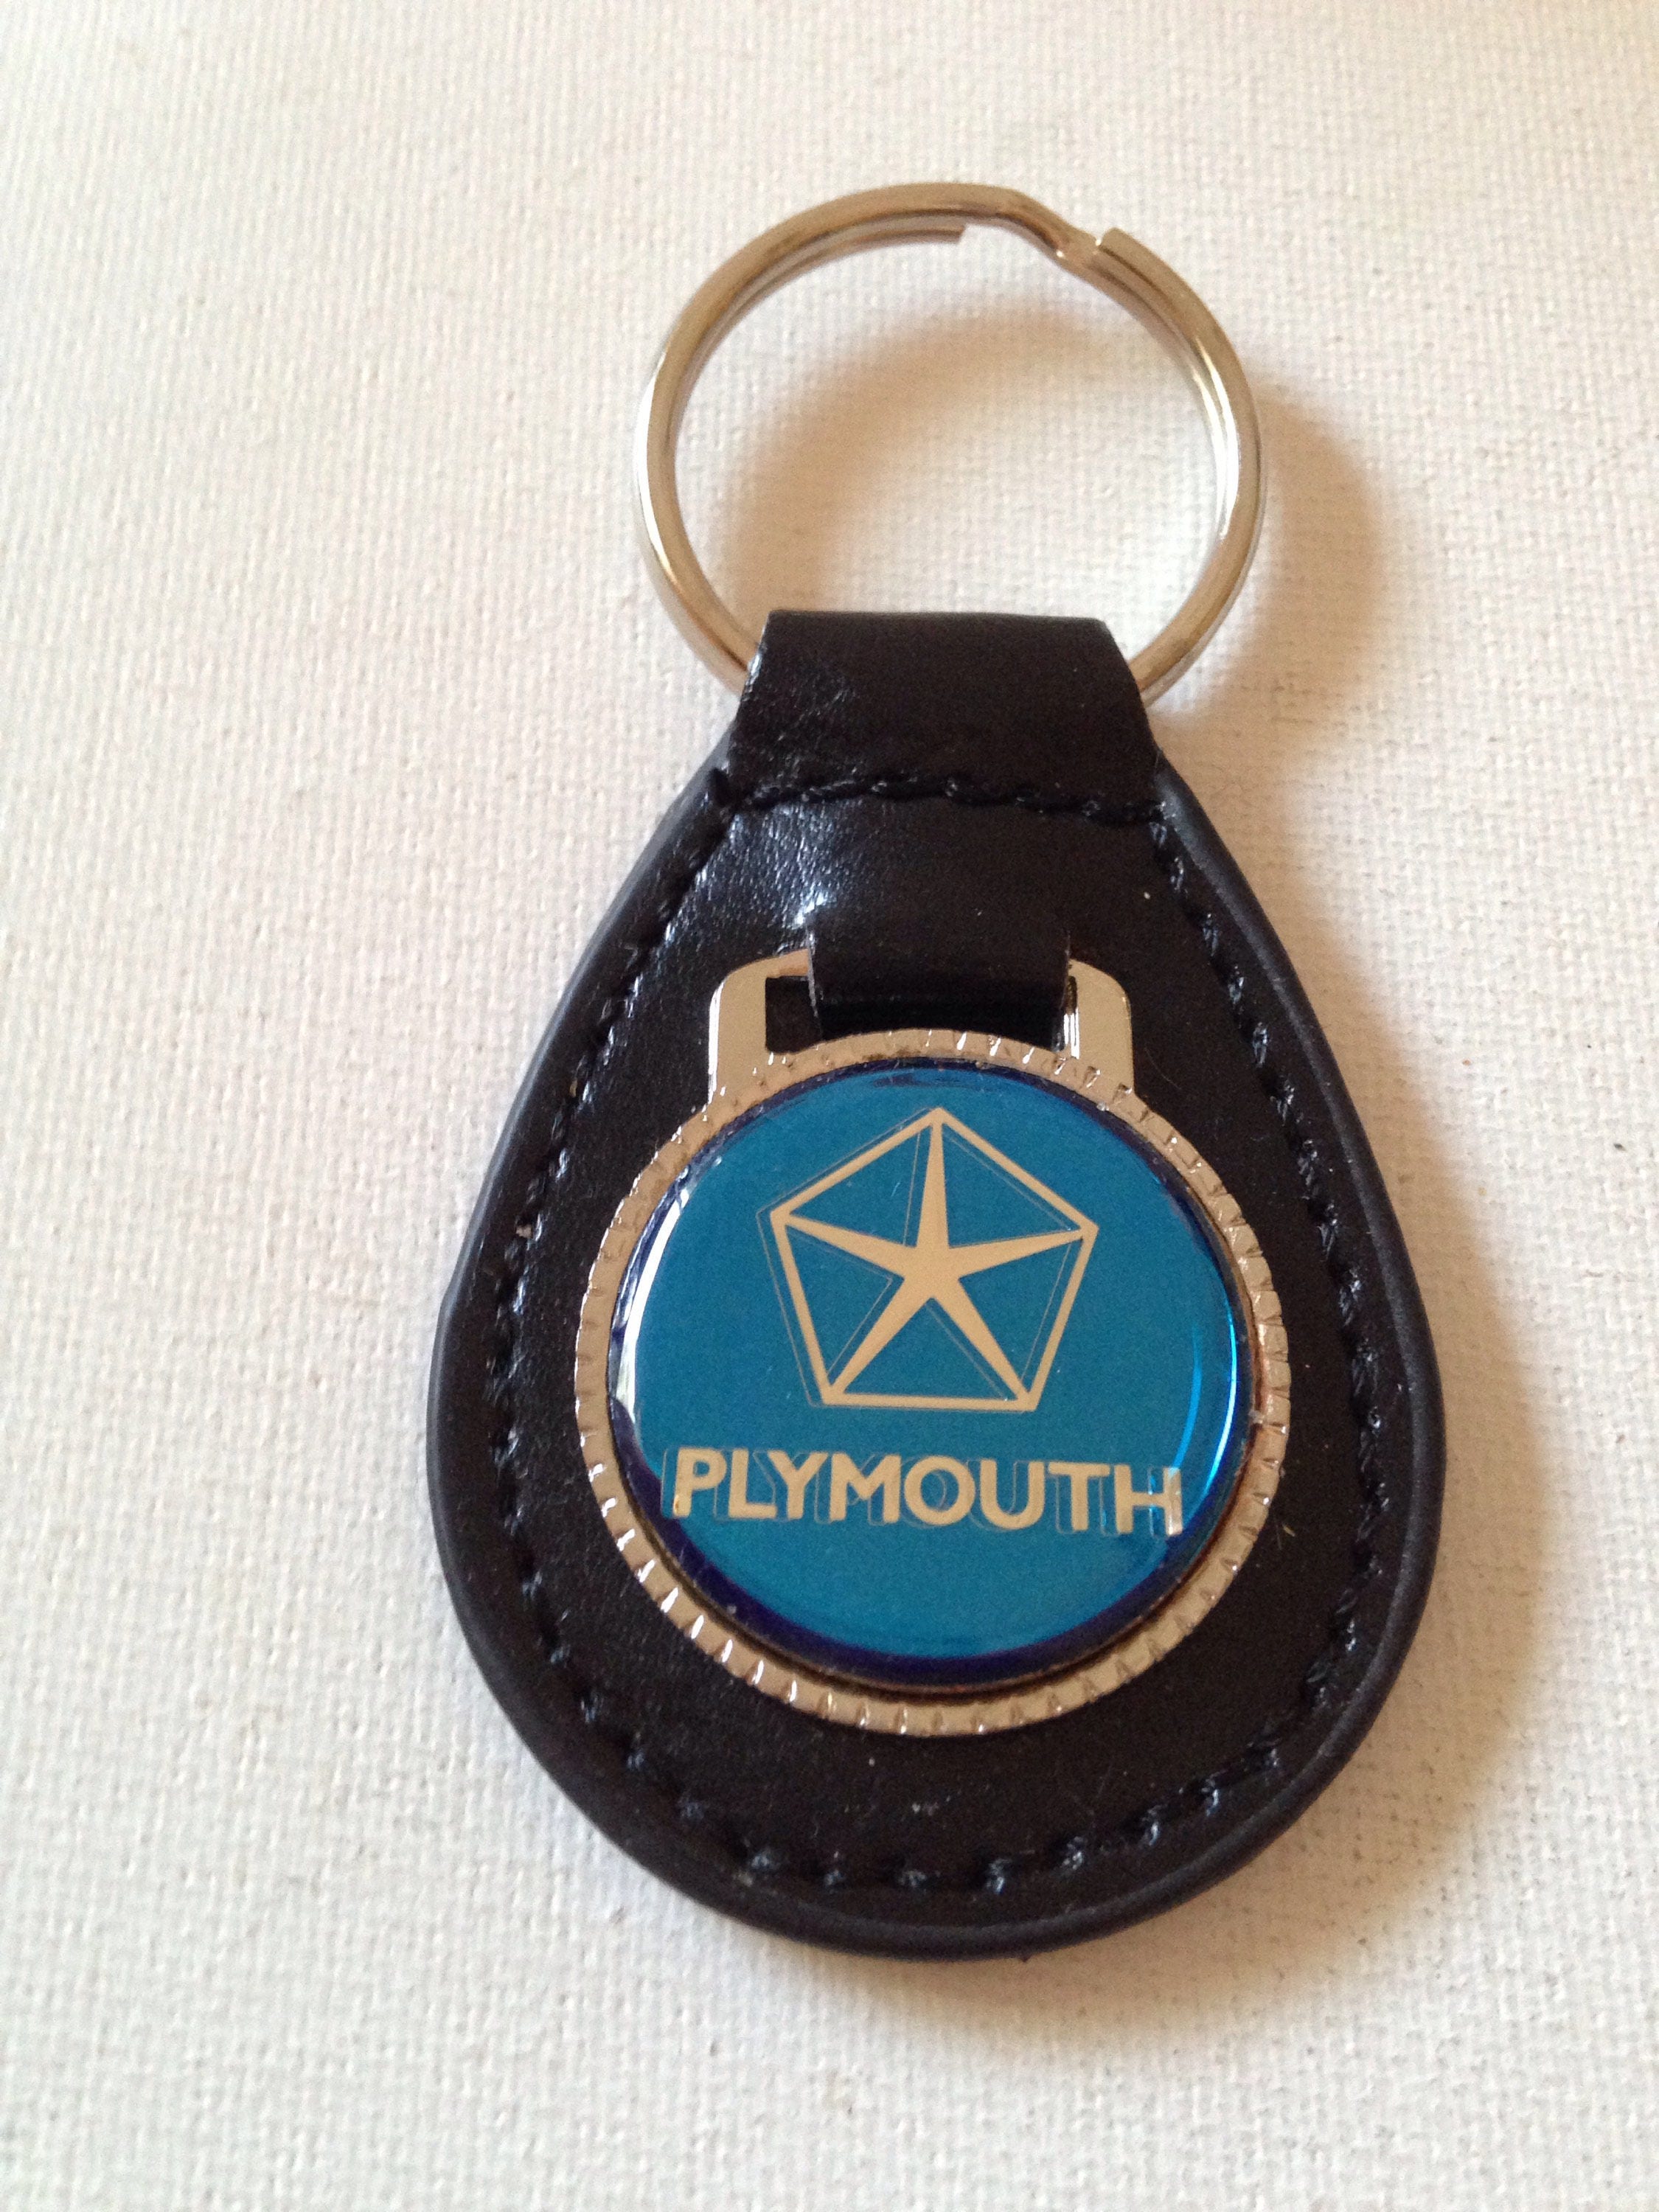 Plymouth Keychain Black Leather Key Chain